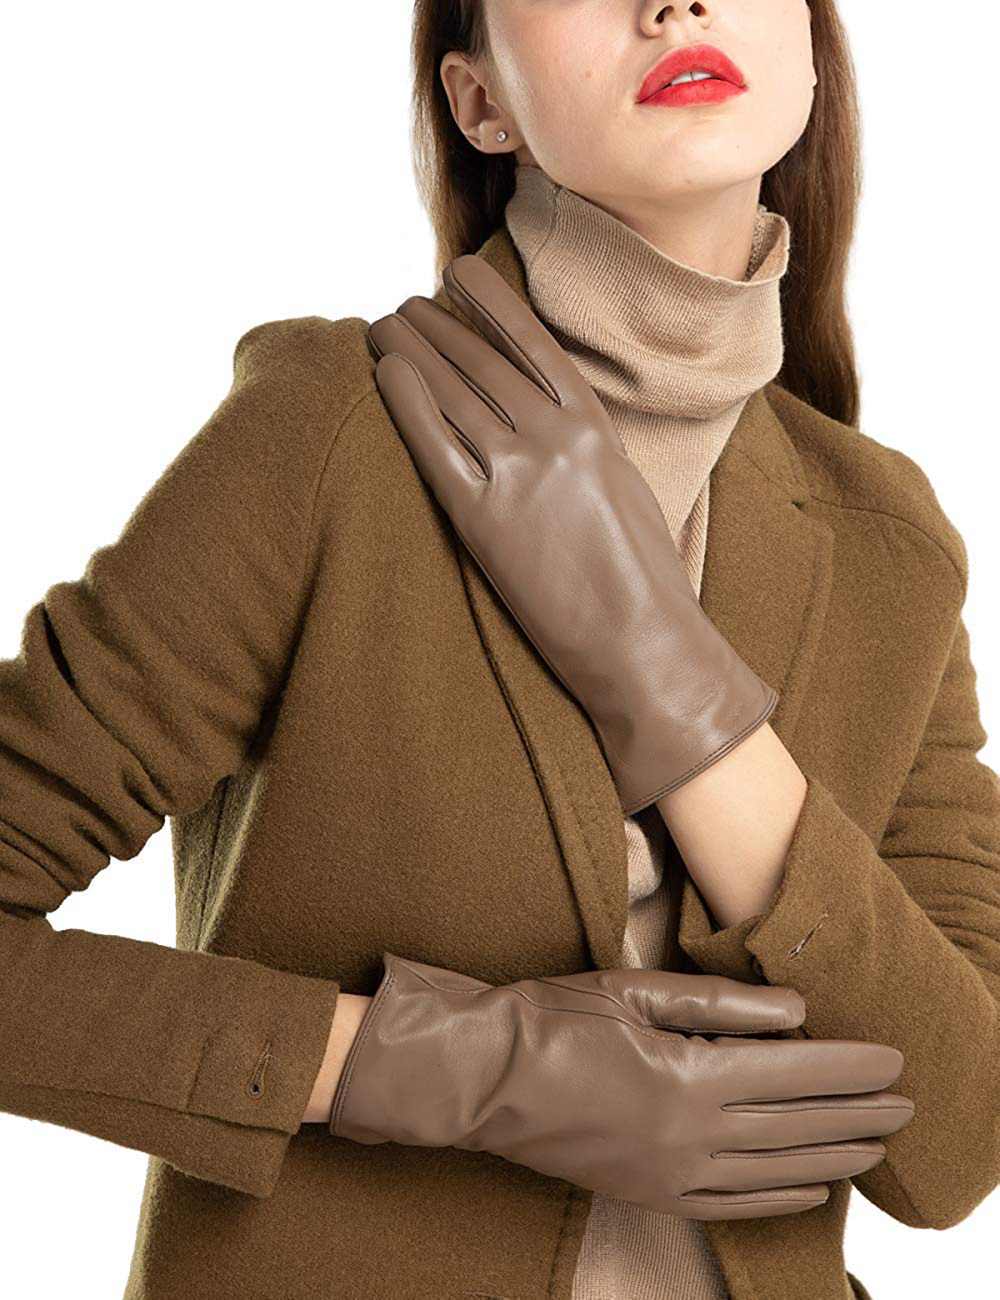 FEIQIAOSH Super-Soft Leather Winter Gloves